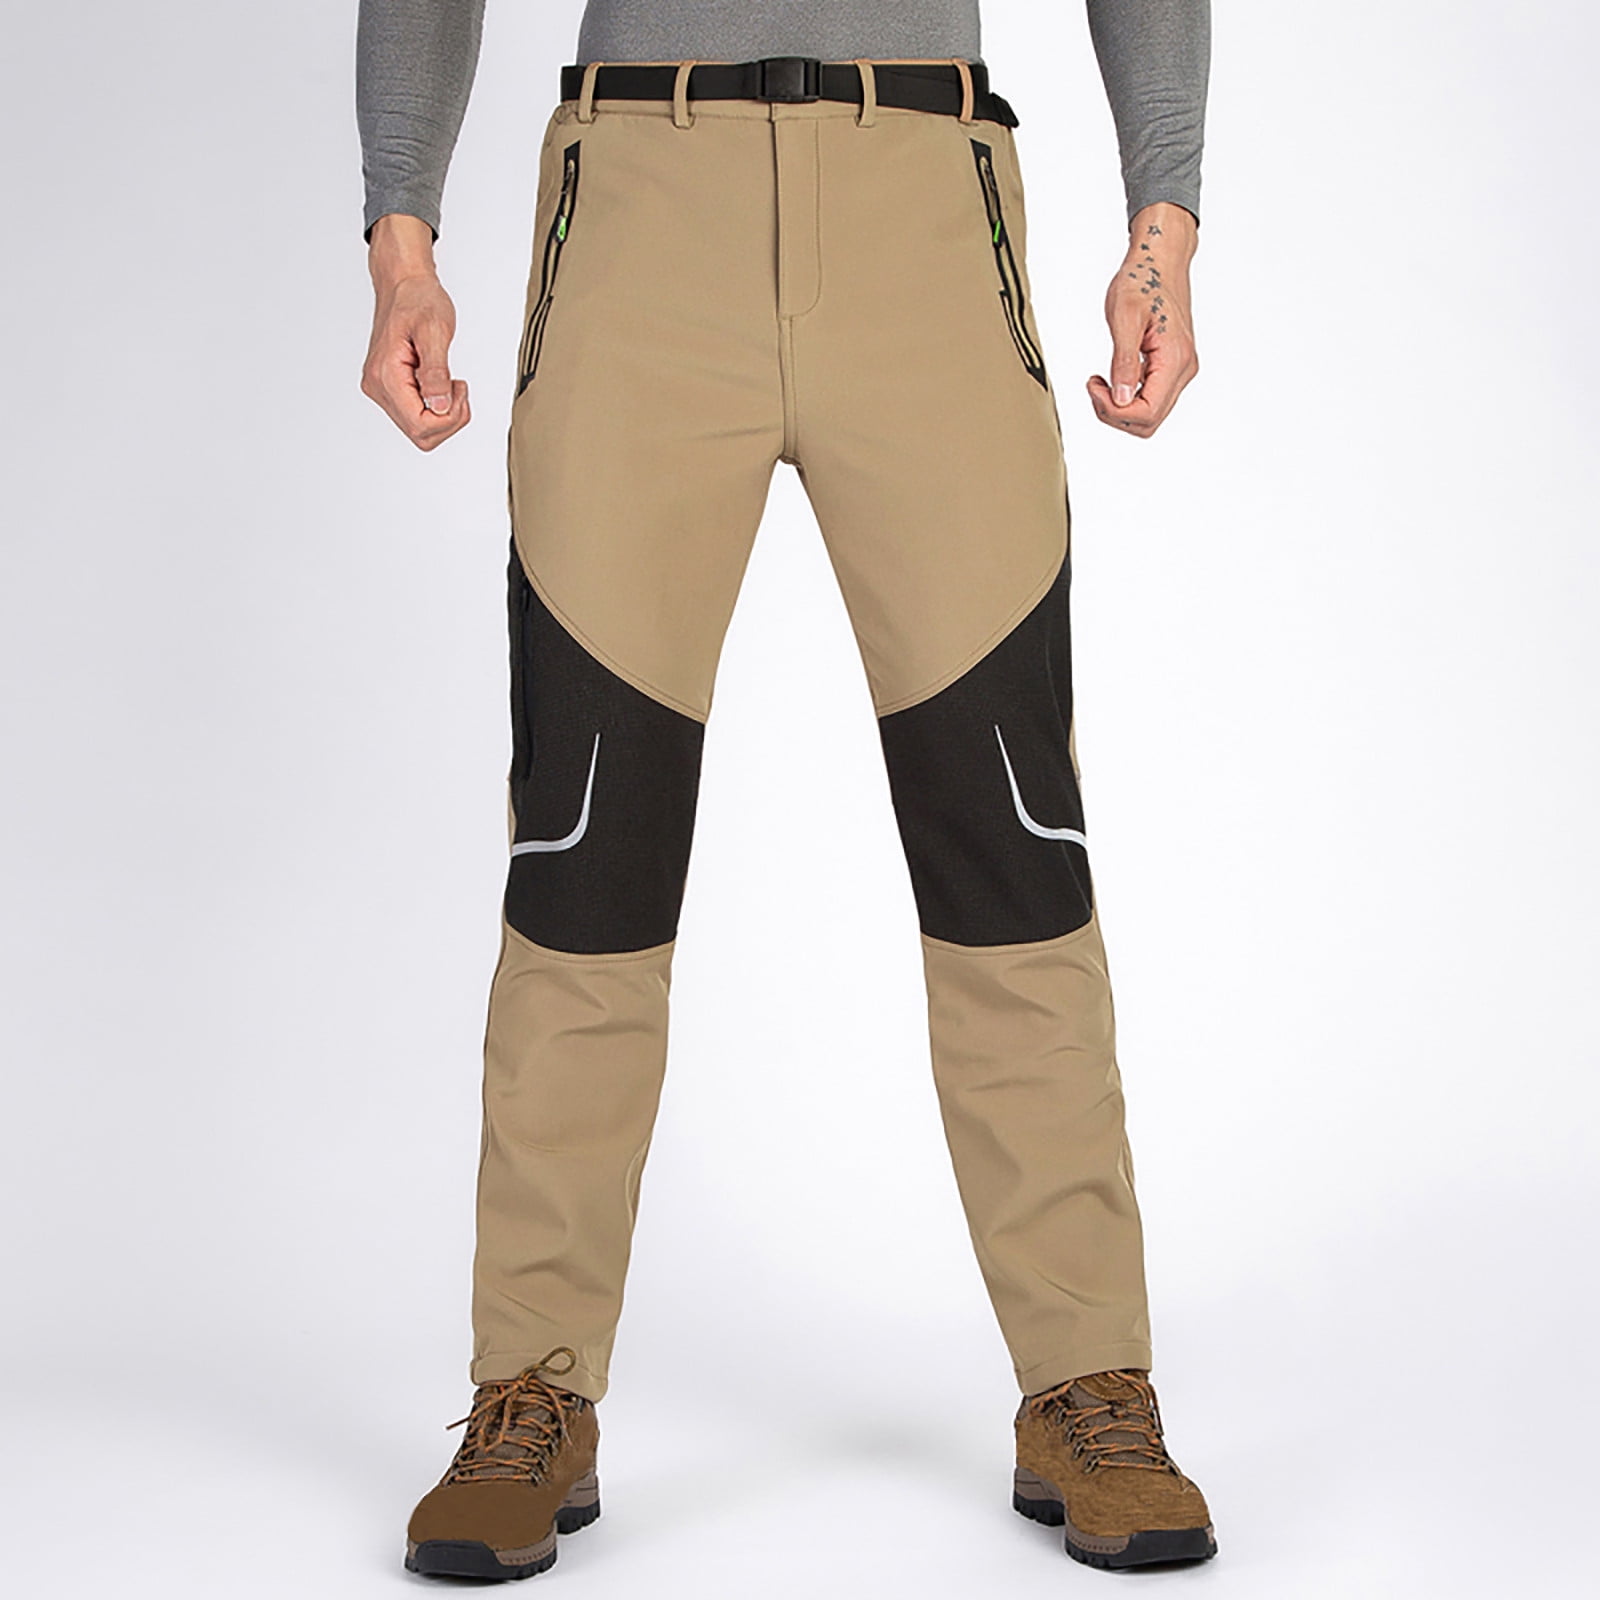 Zynviq Man Pants for Men Active Water Proof Hiking Pants Workout Pants ...